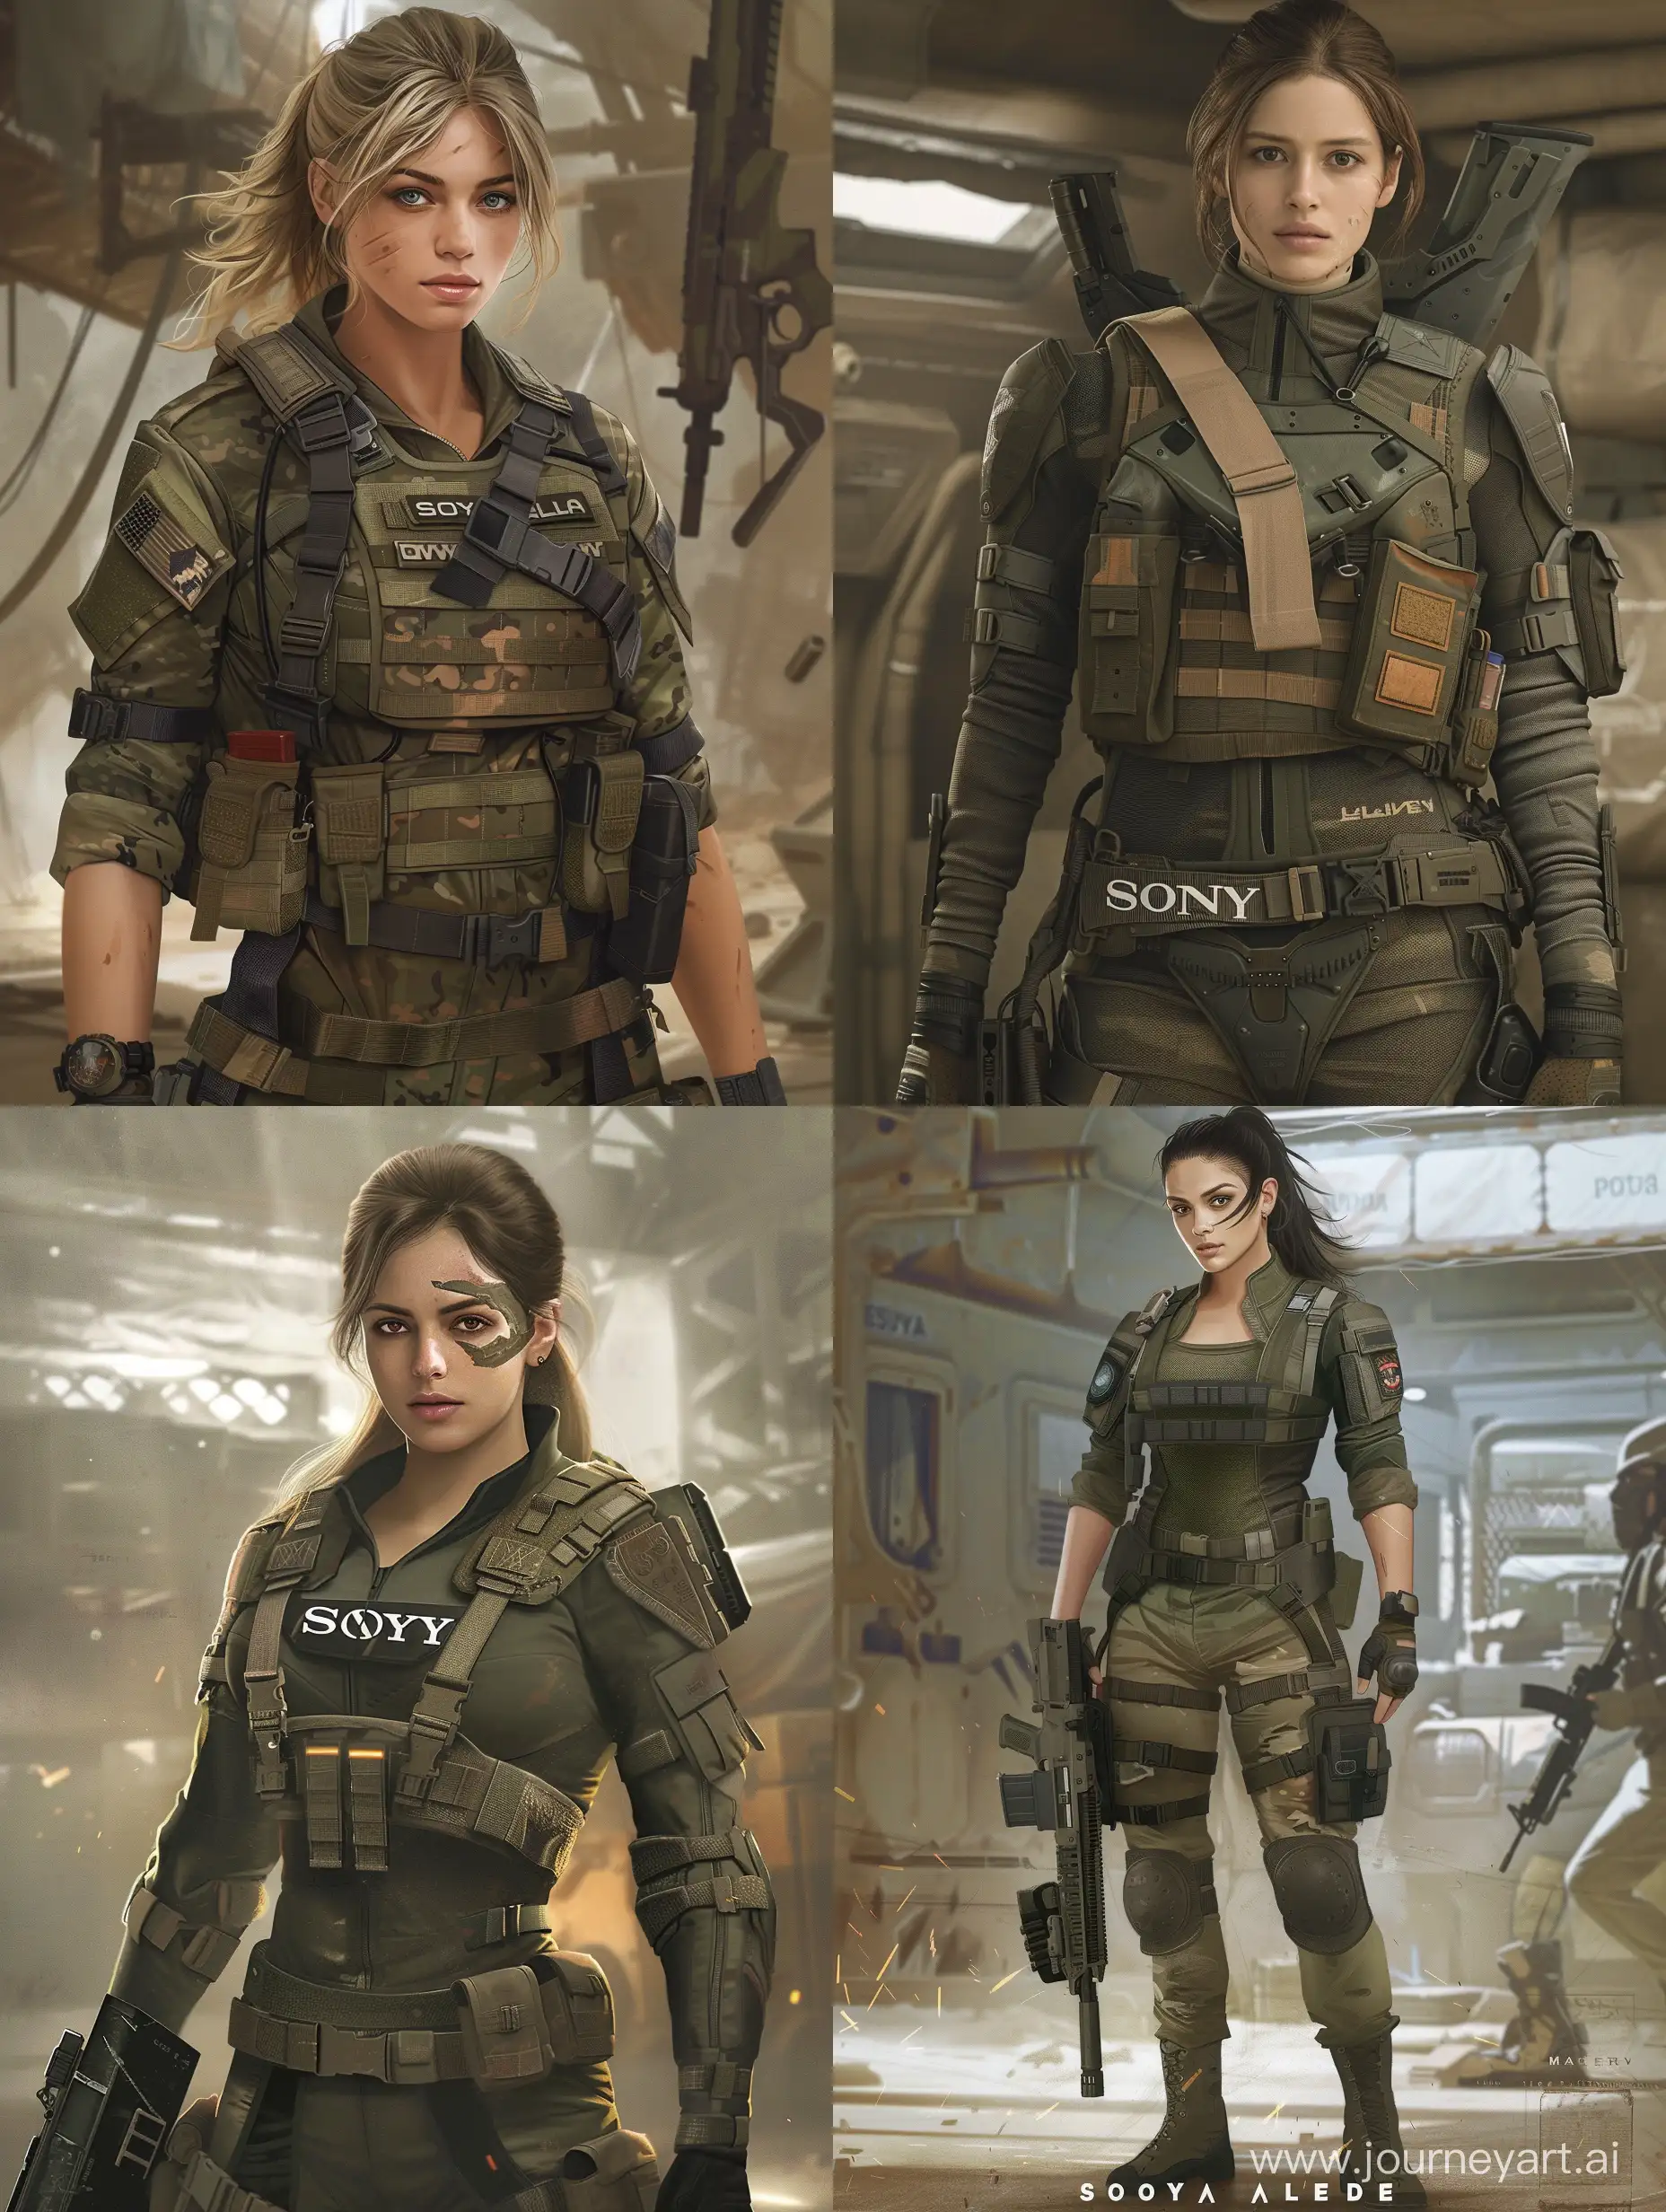 Sonya-Blade-Military-Warrior-in-Photorealistic-Costume